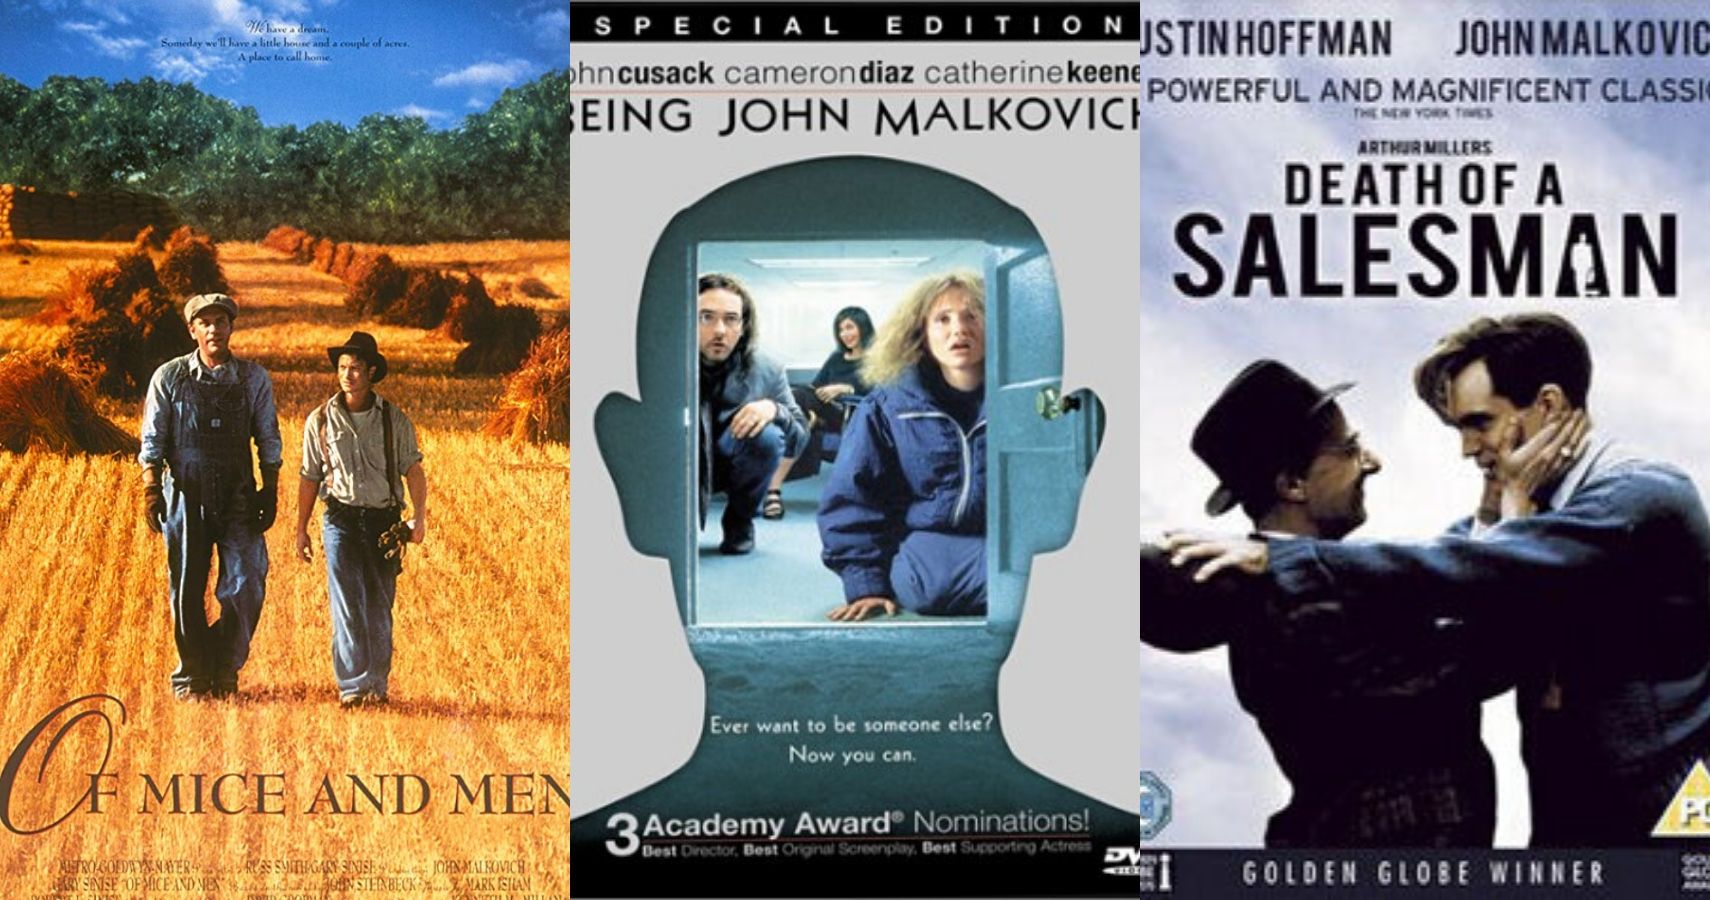 John Malkovichs 10 Best Movies According To Rotten Tomatoes